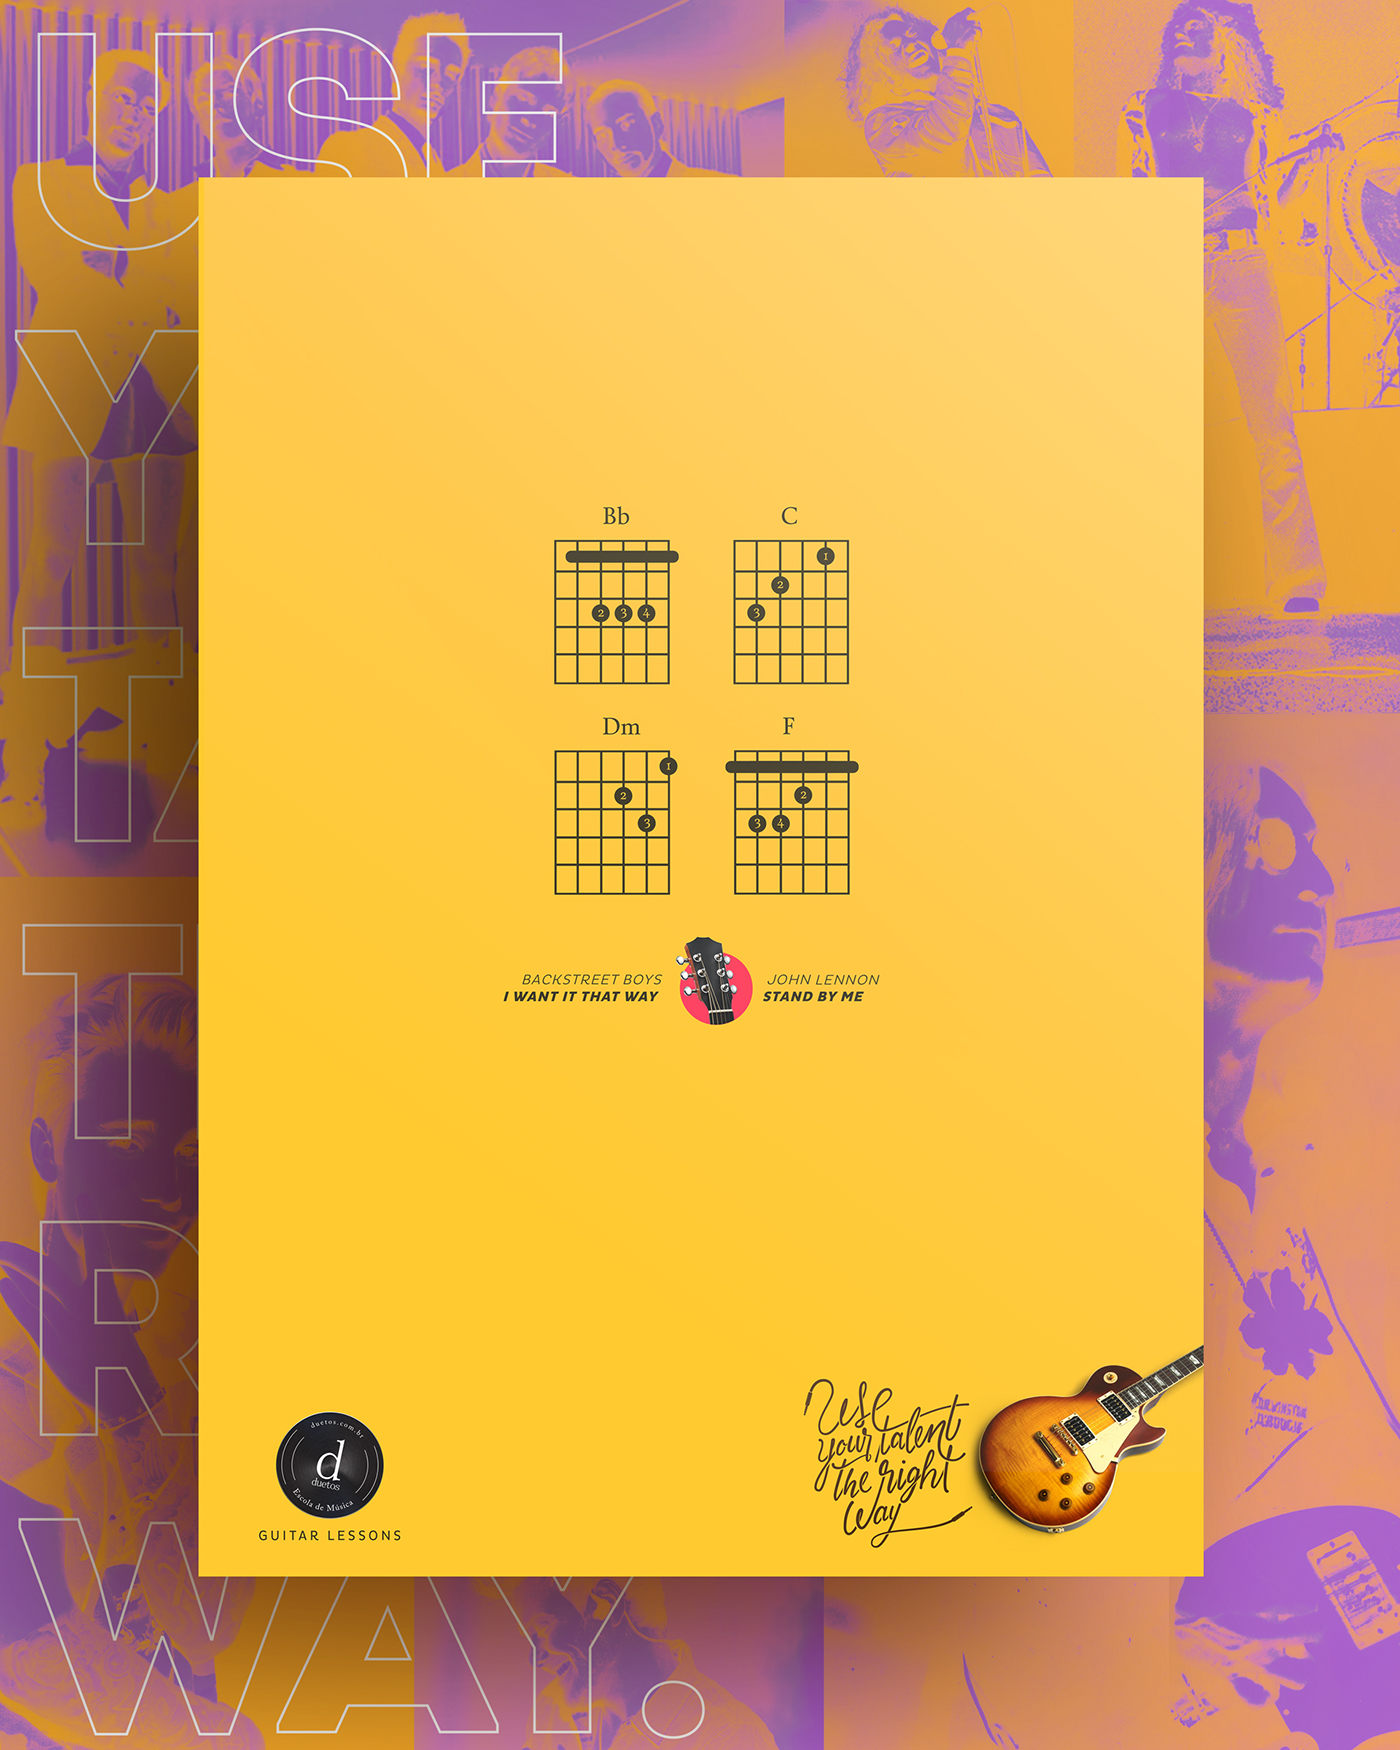 Adobe Portfolio music Archive guitar rock notes Beatles type branding  poster